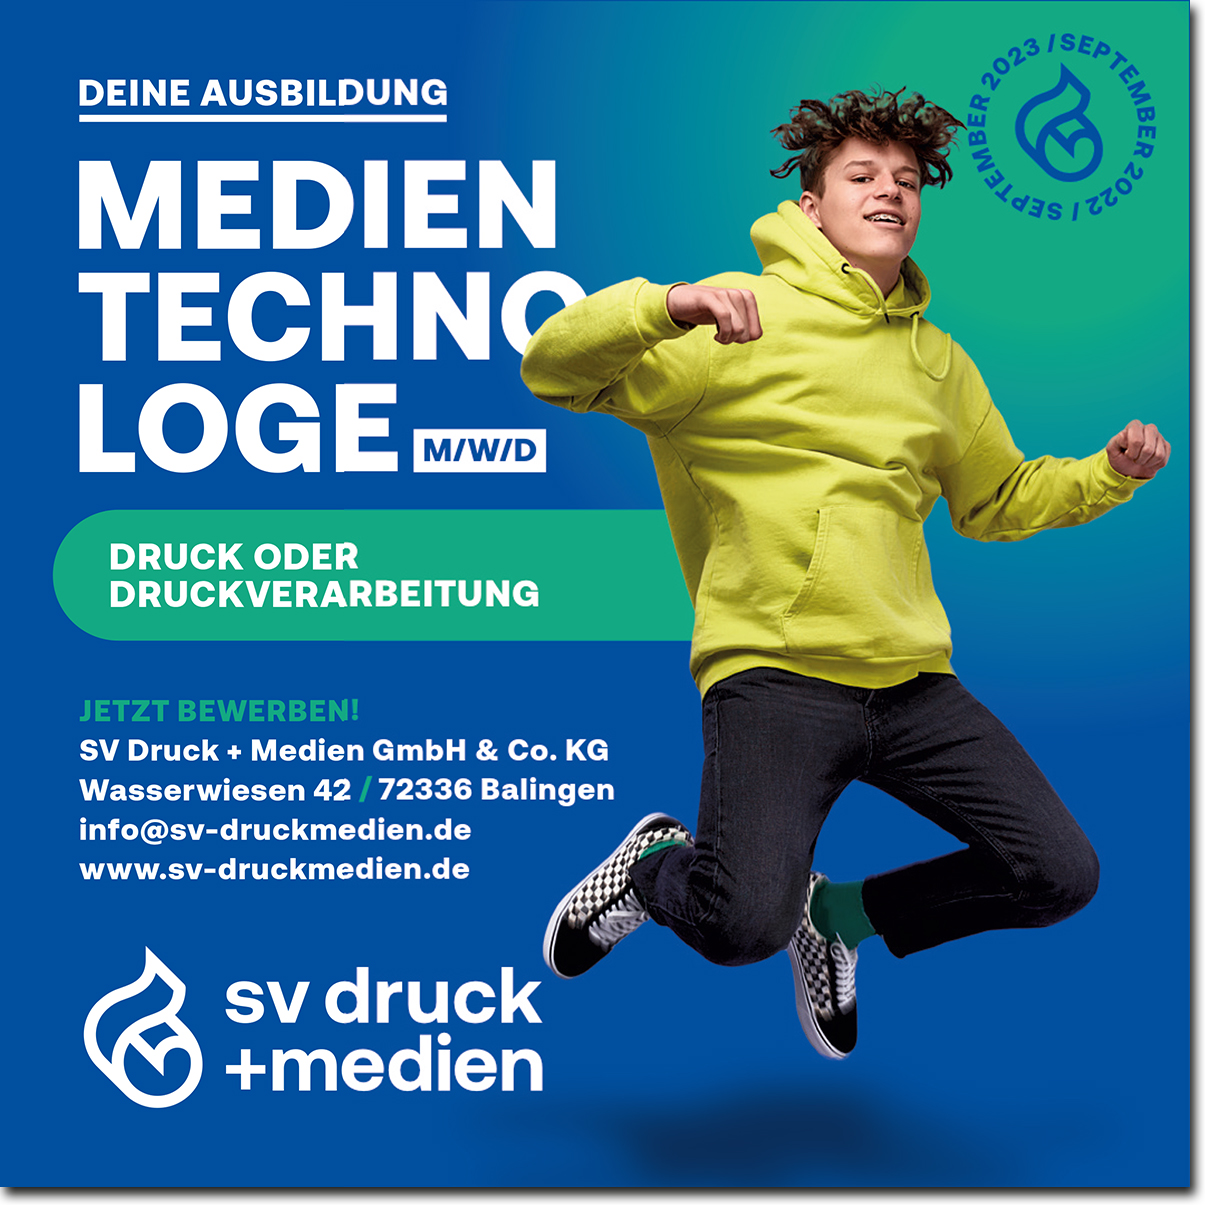 SV Druck + Medien GmbH & Co. KG